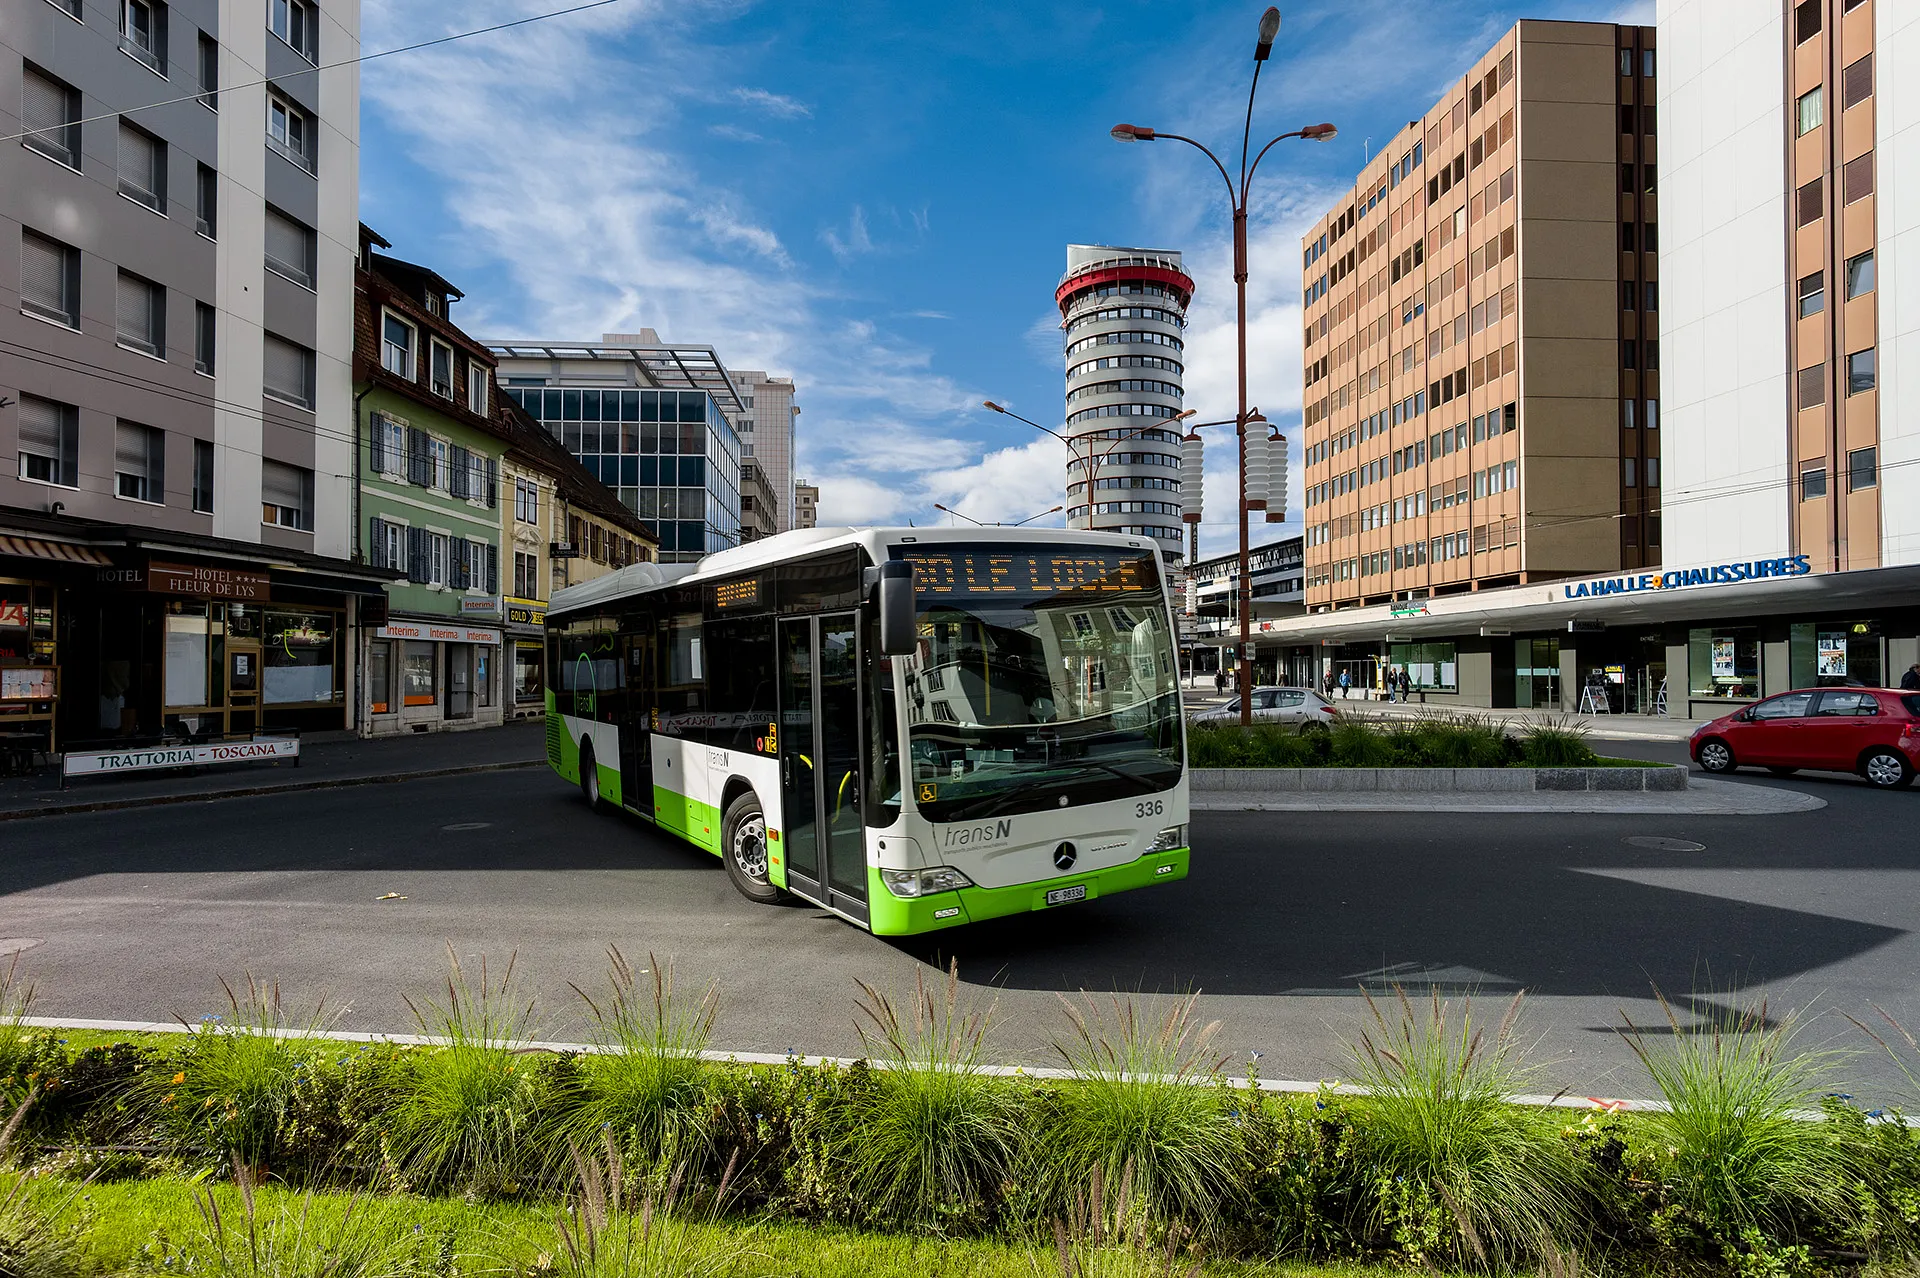 transN - Transports Publics Neuchâtelois SA